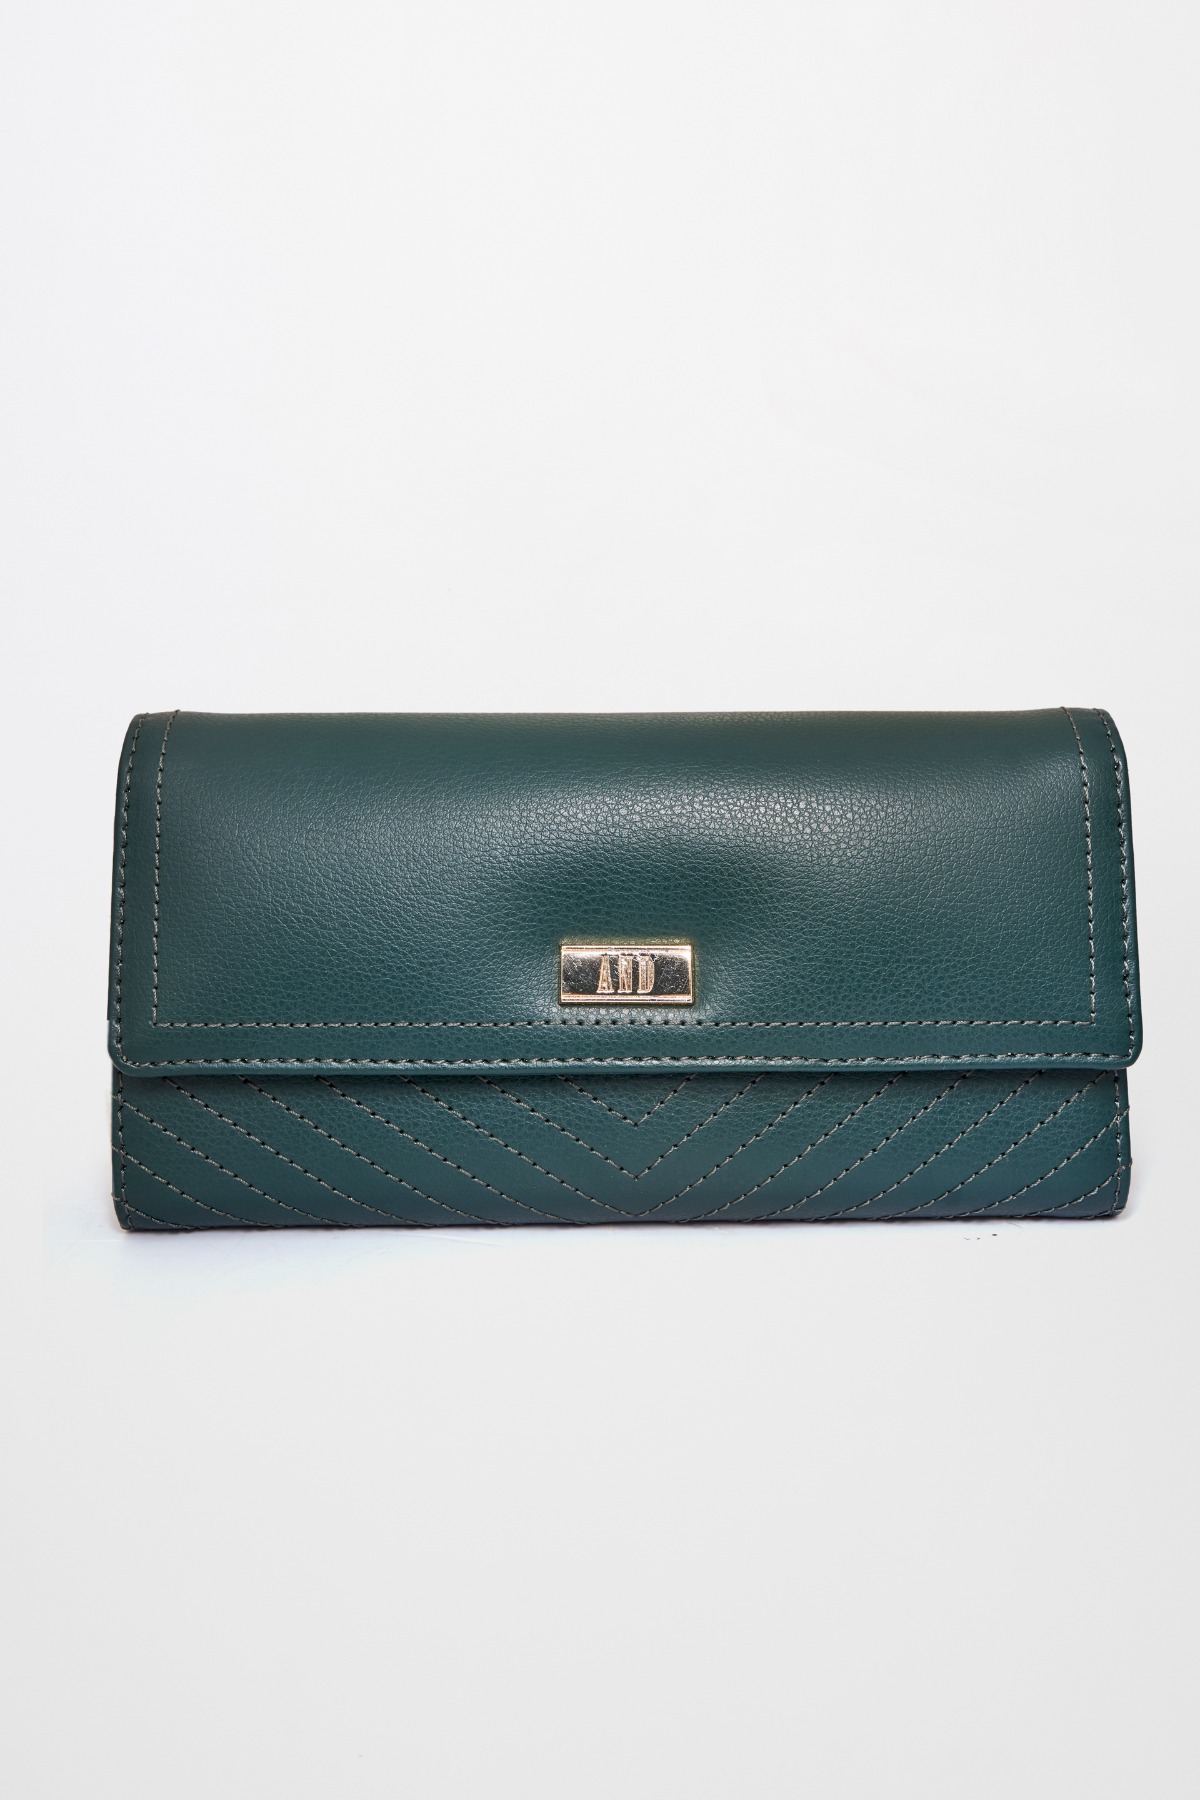 2 - Green Handbag, image 1